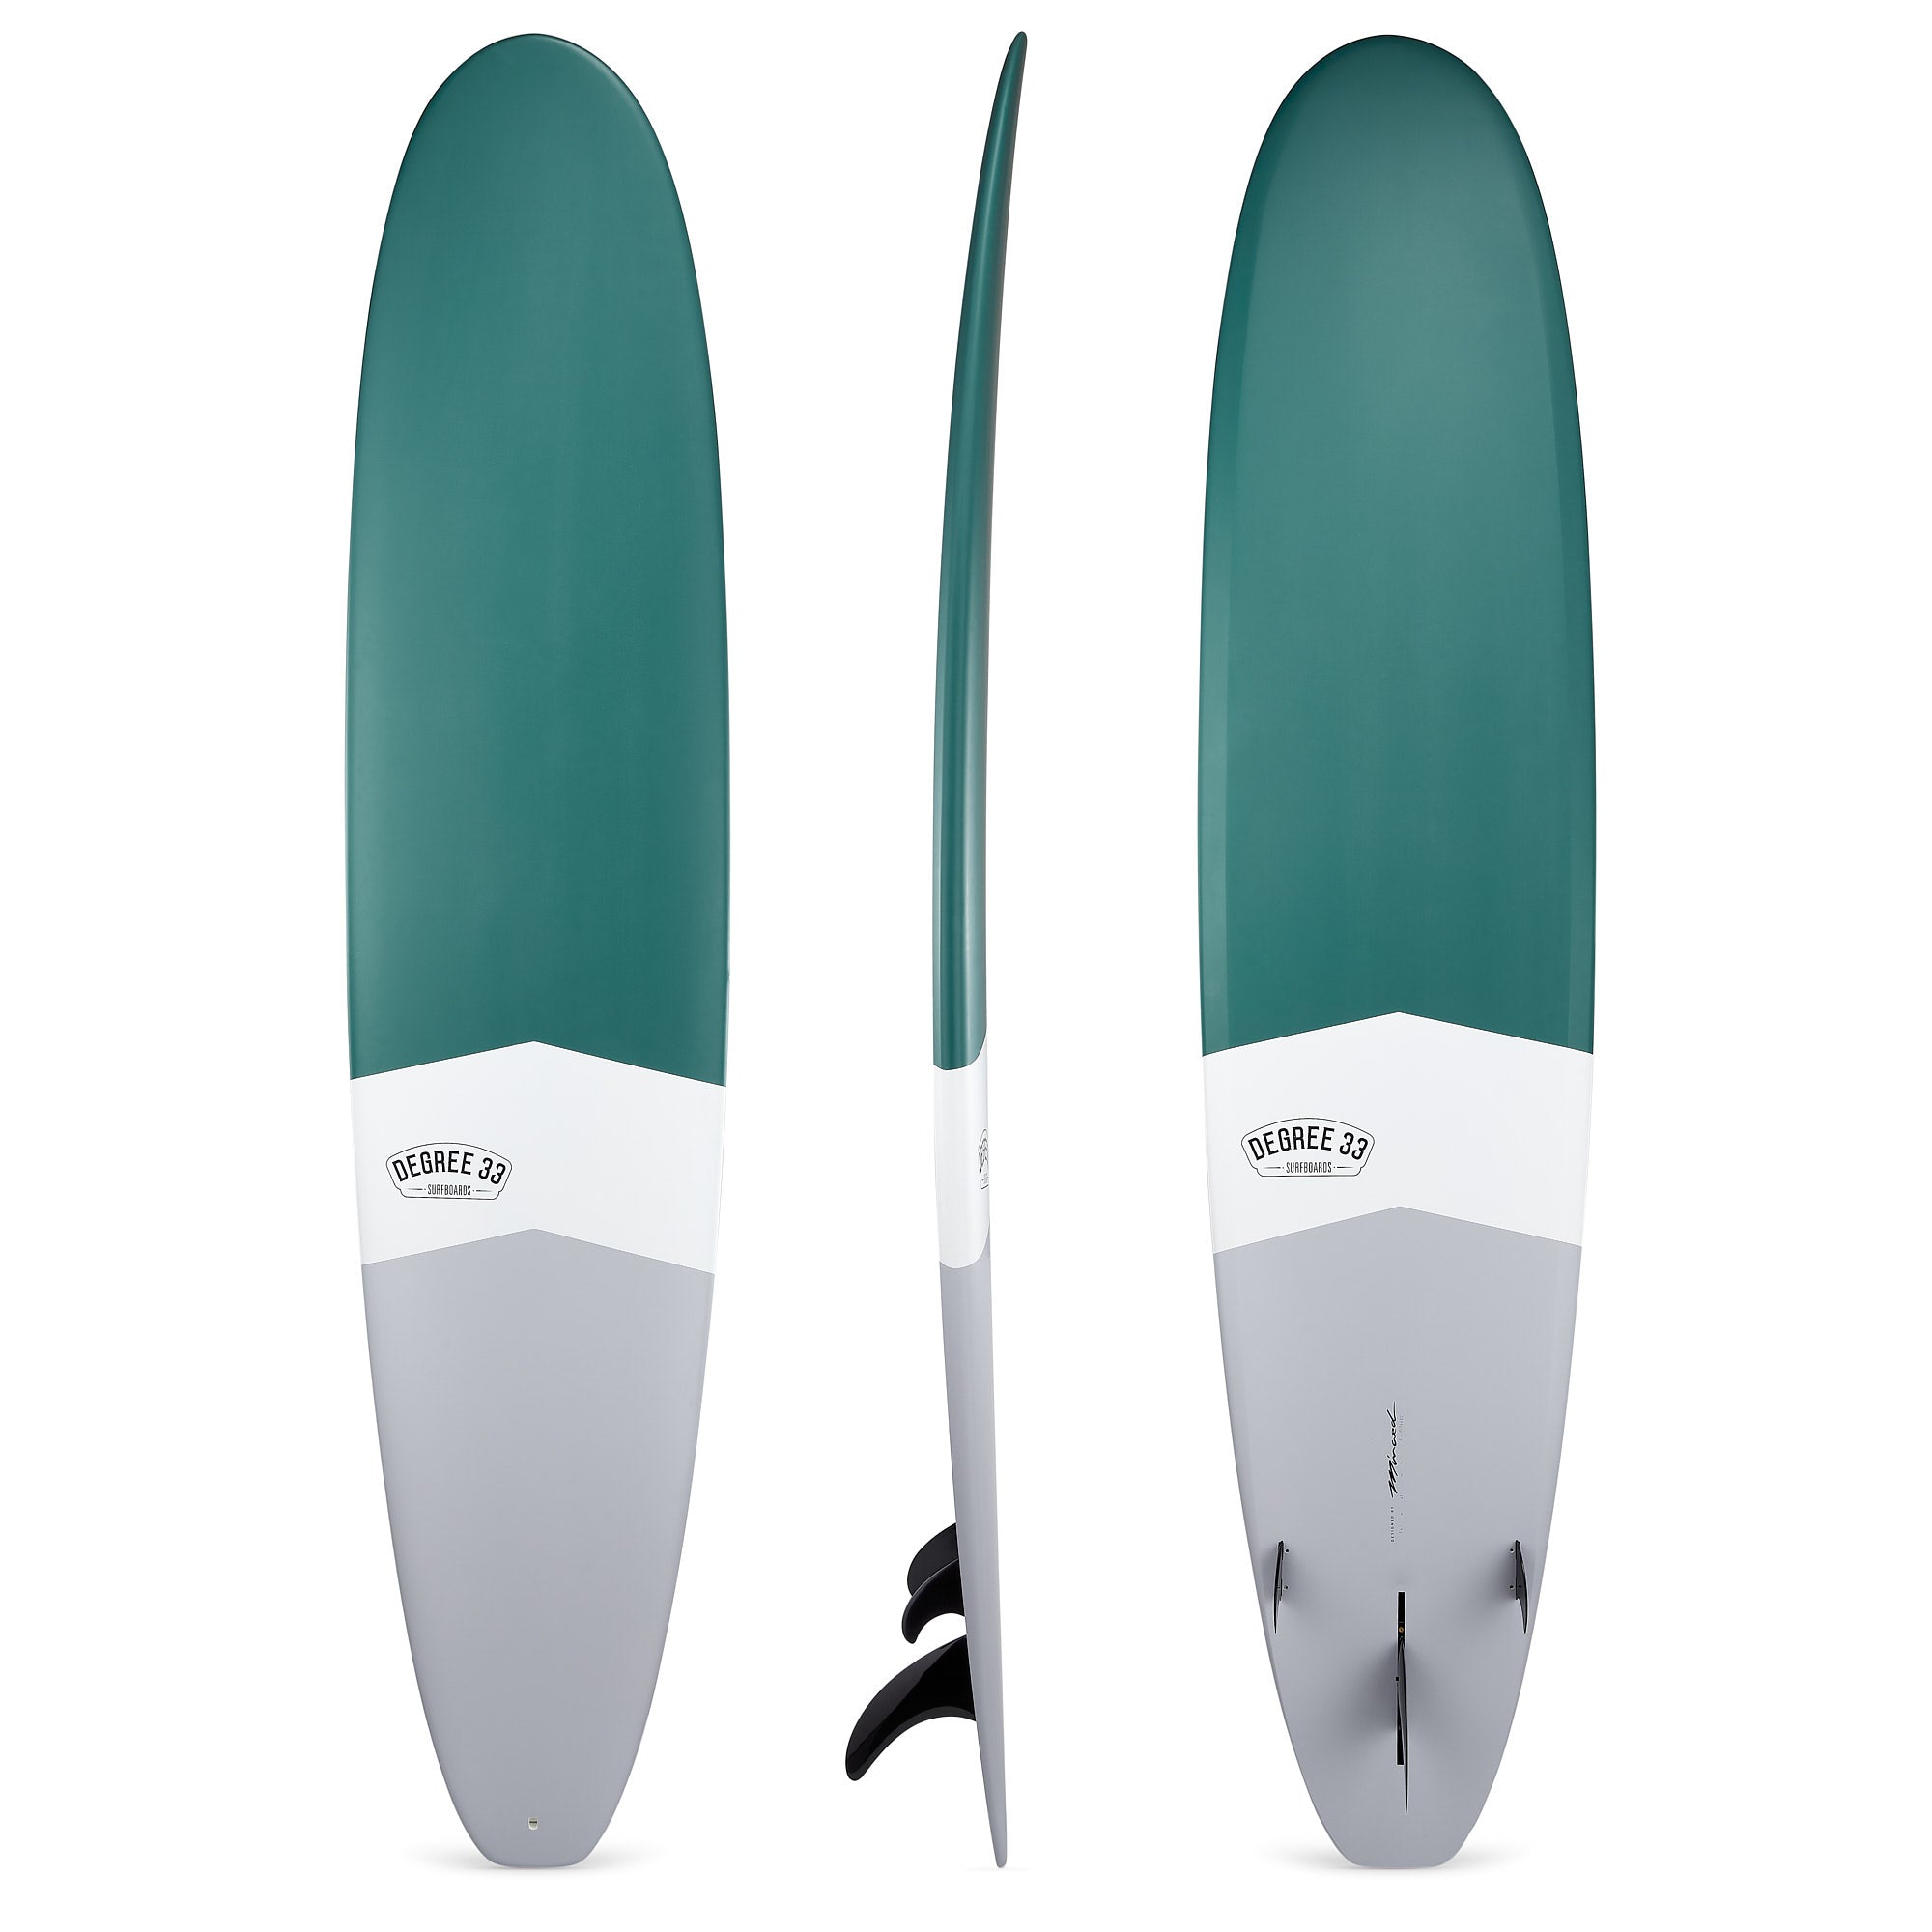 Se tilbage smid væk Persona 9' Ultimate Longboard Surfboard Teal Chevron (Epoxy) - Degree 33 Surfboards